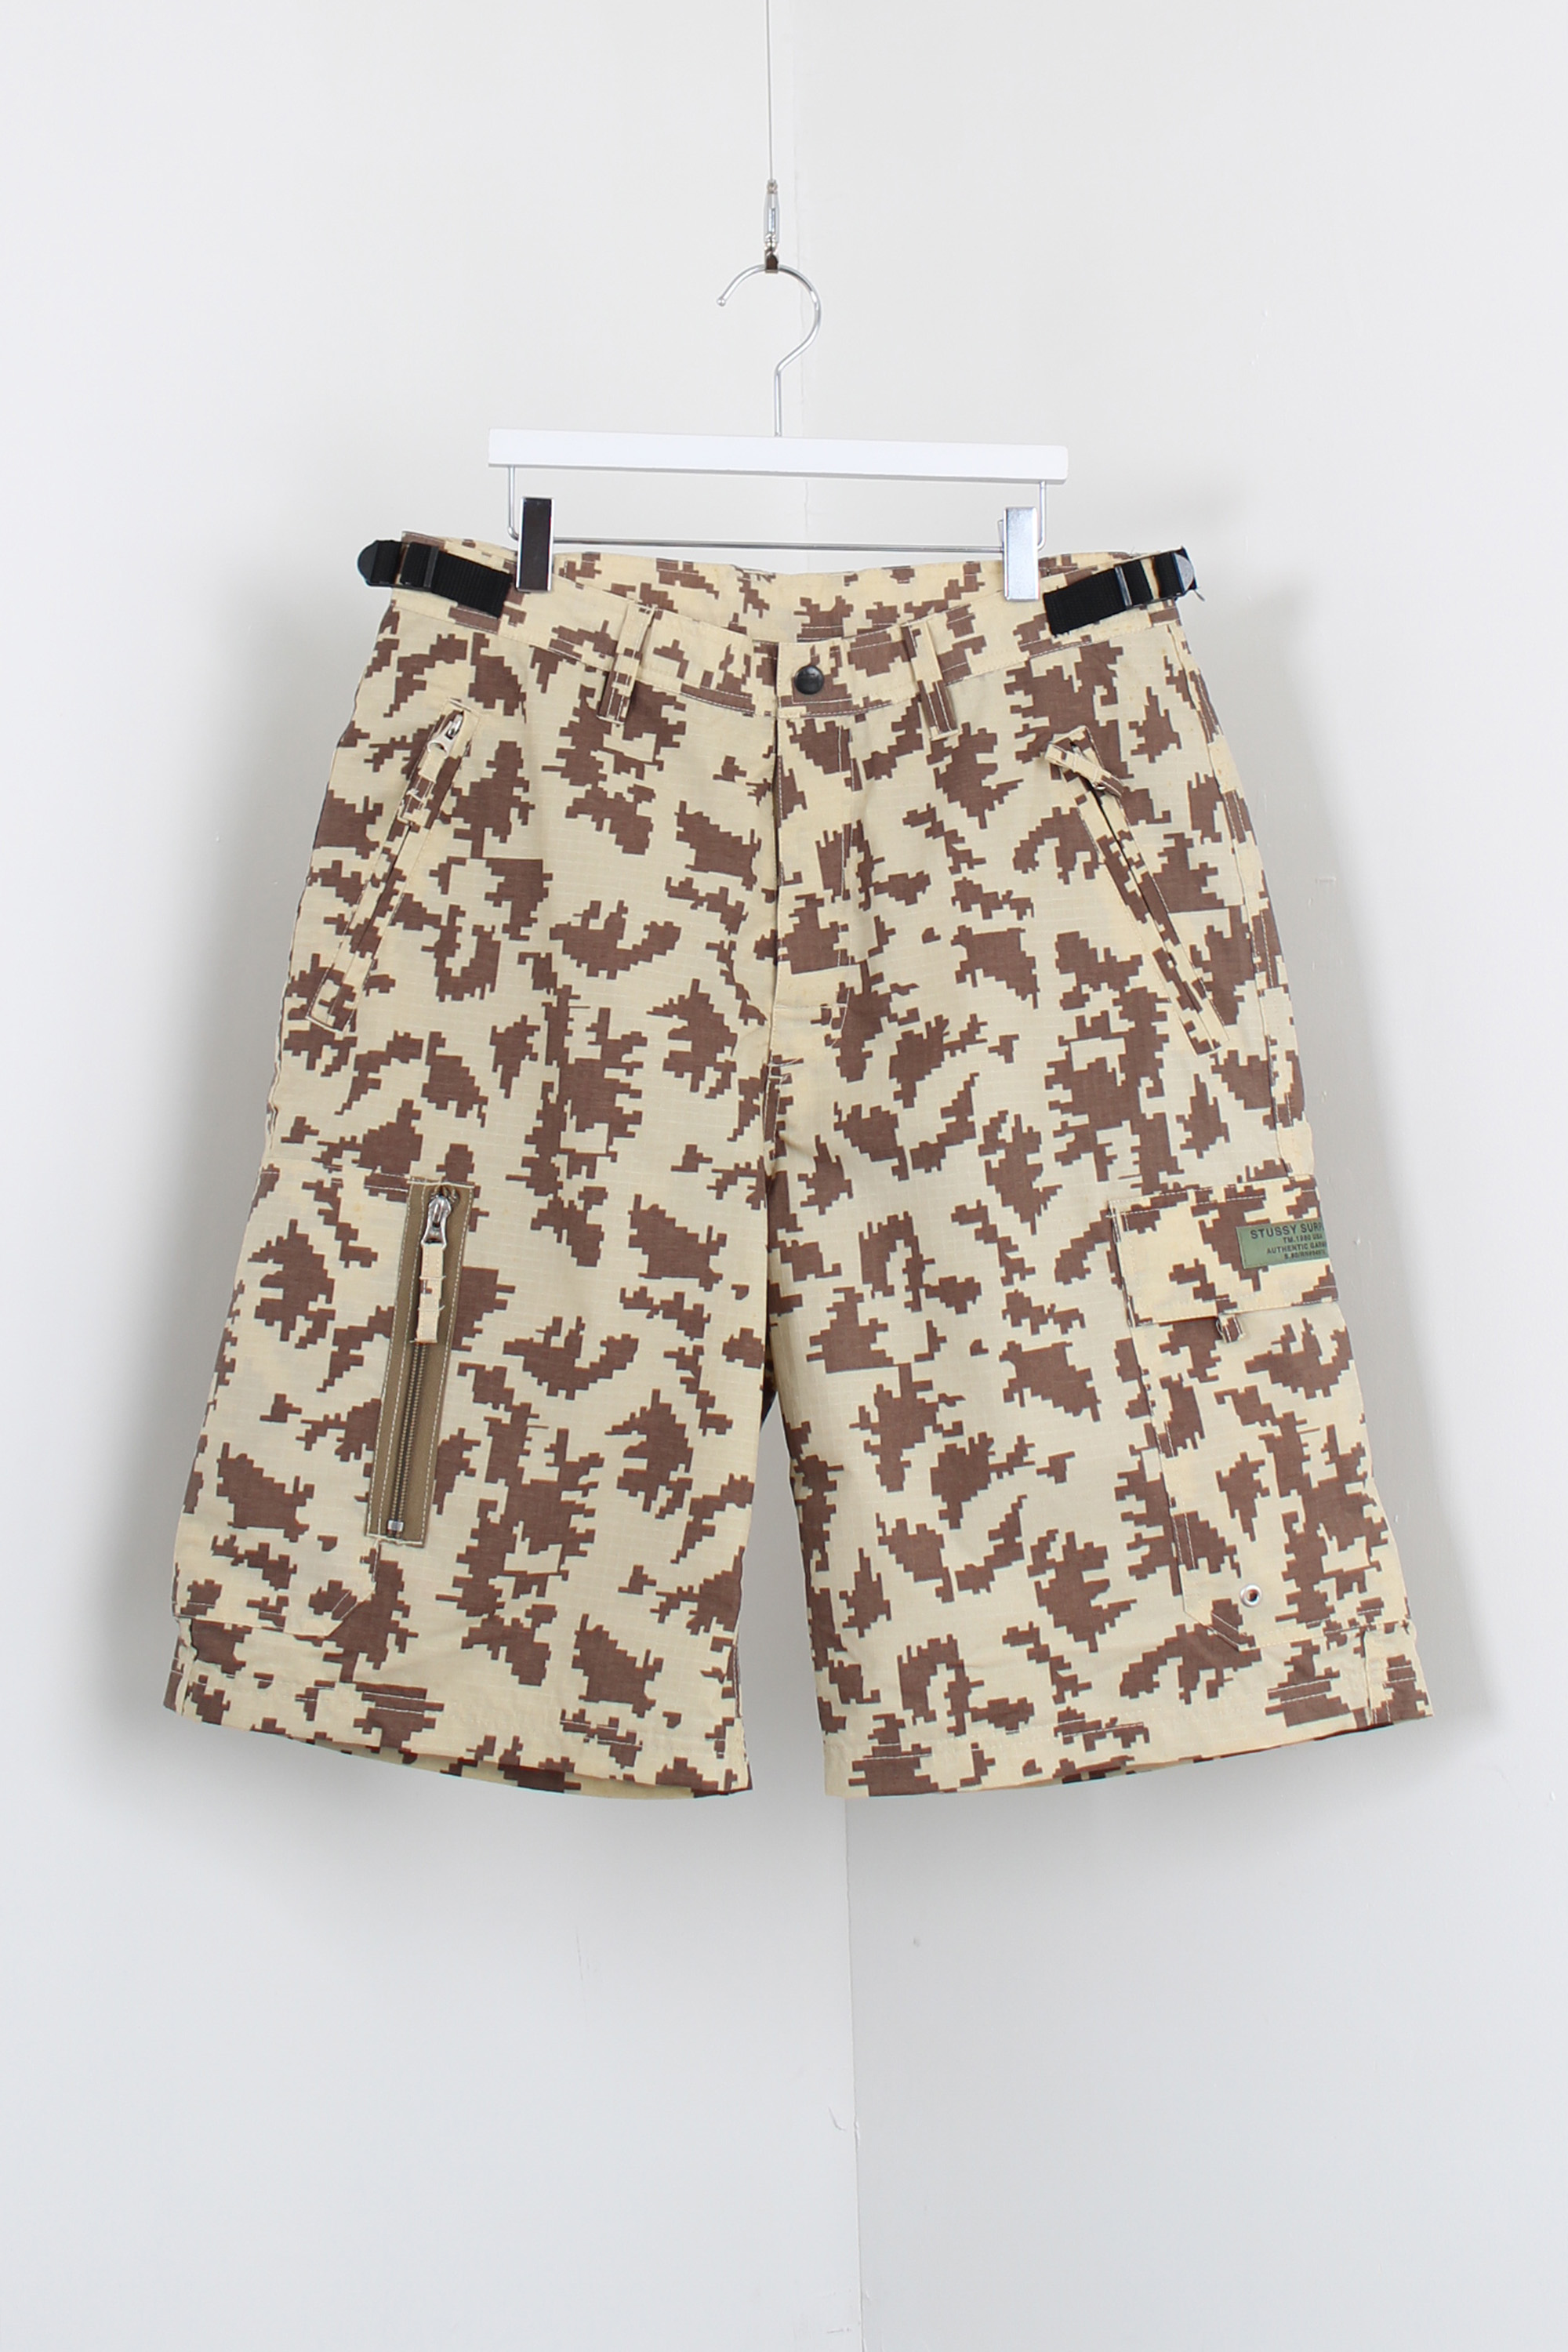 90s STUSSY desert camo shorts